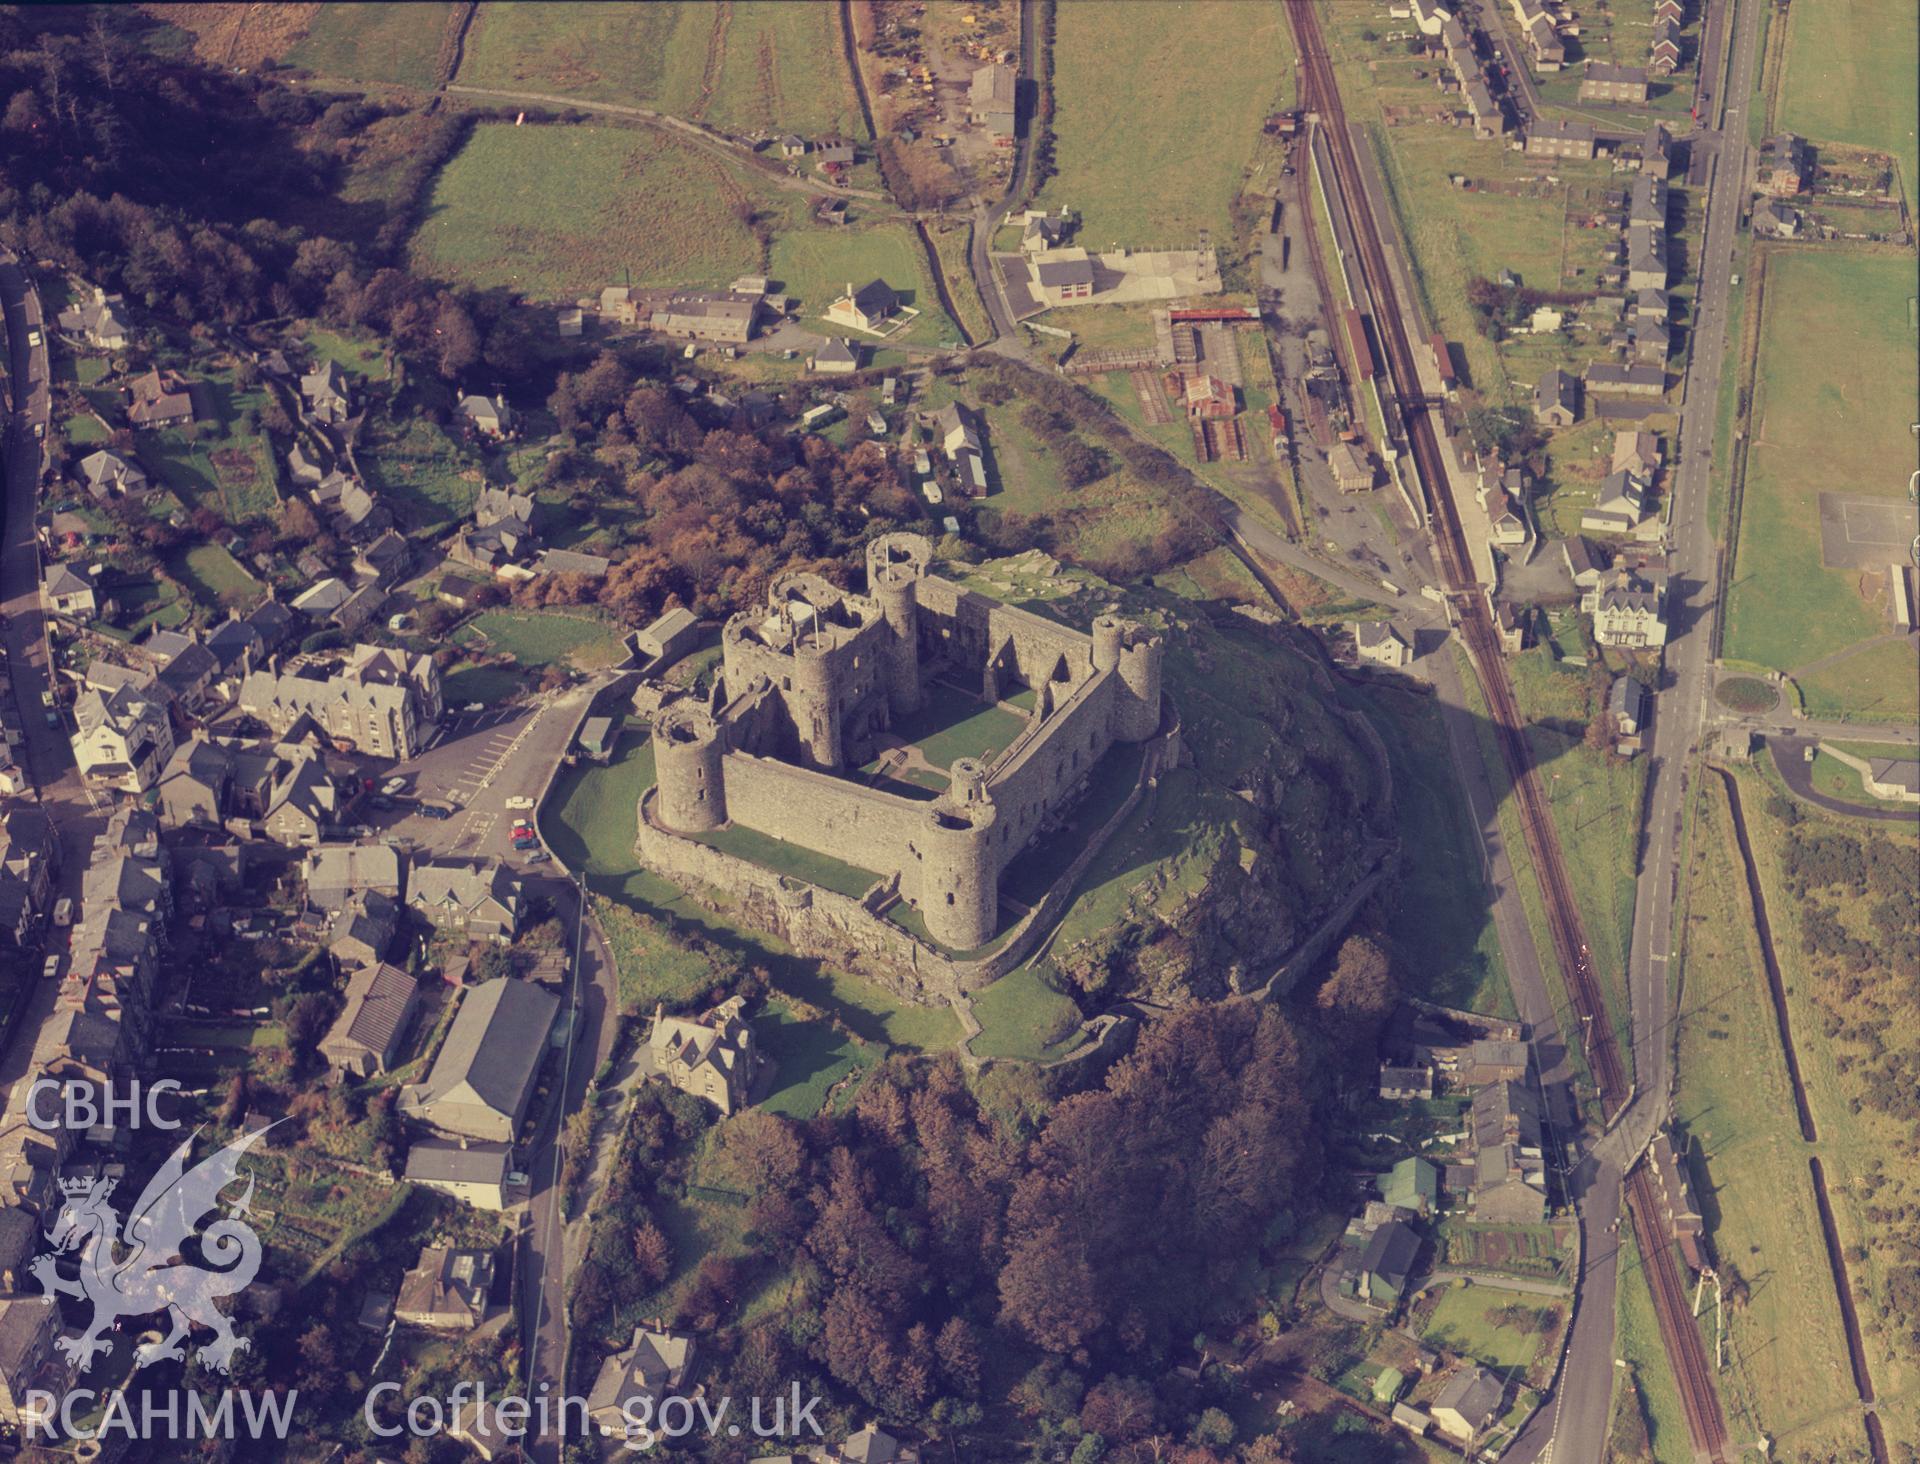 Digital copy of a colour negative showing view of Harlech Castle.